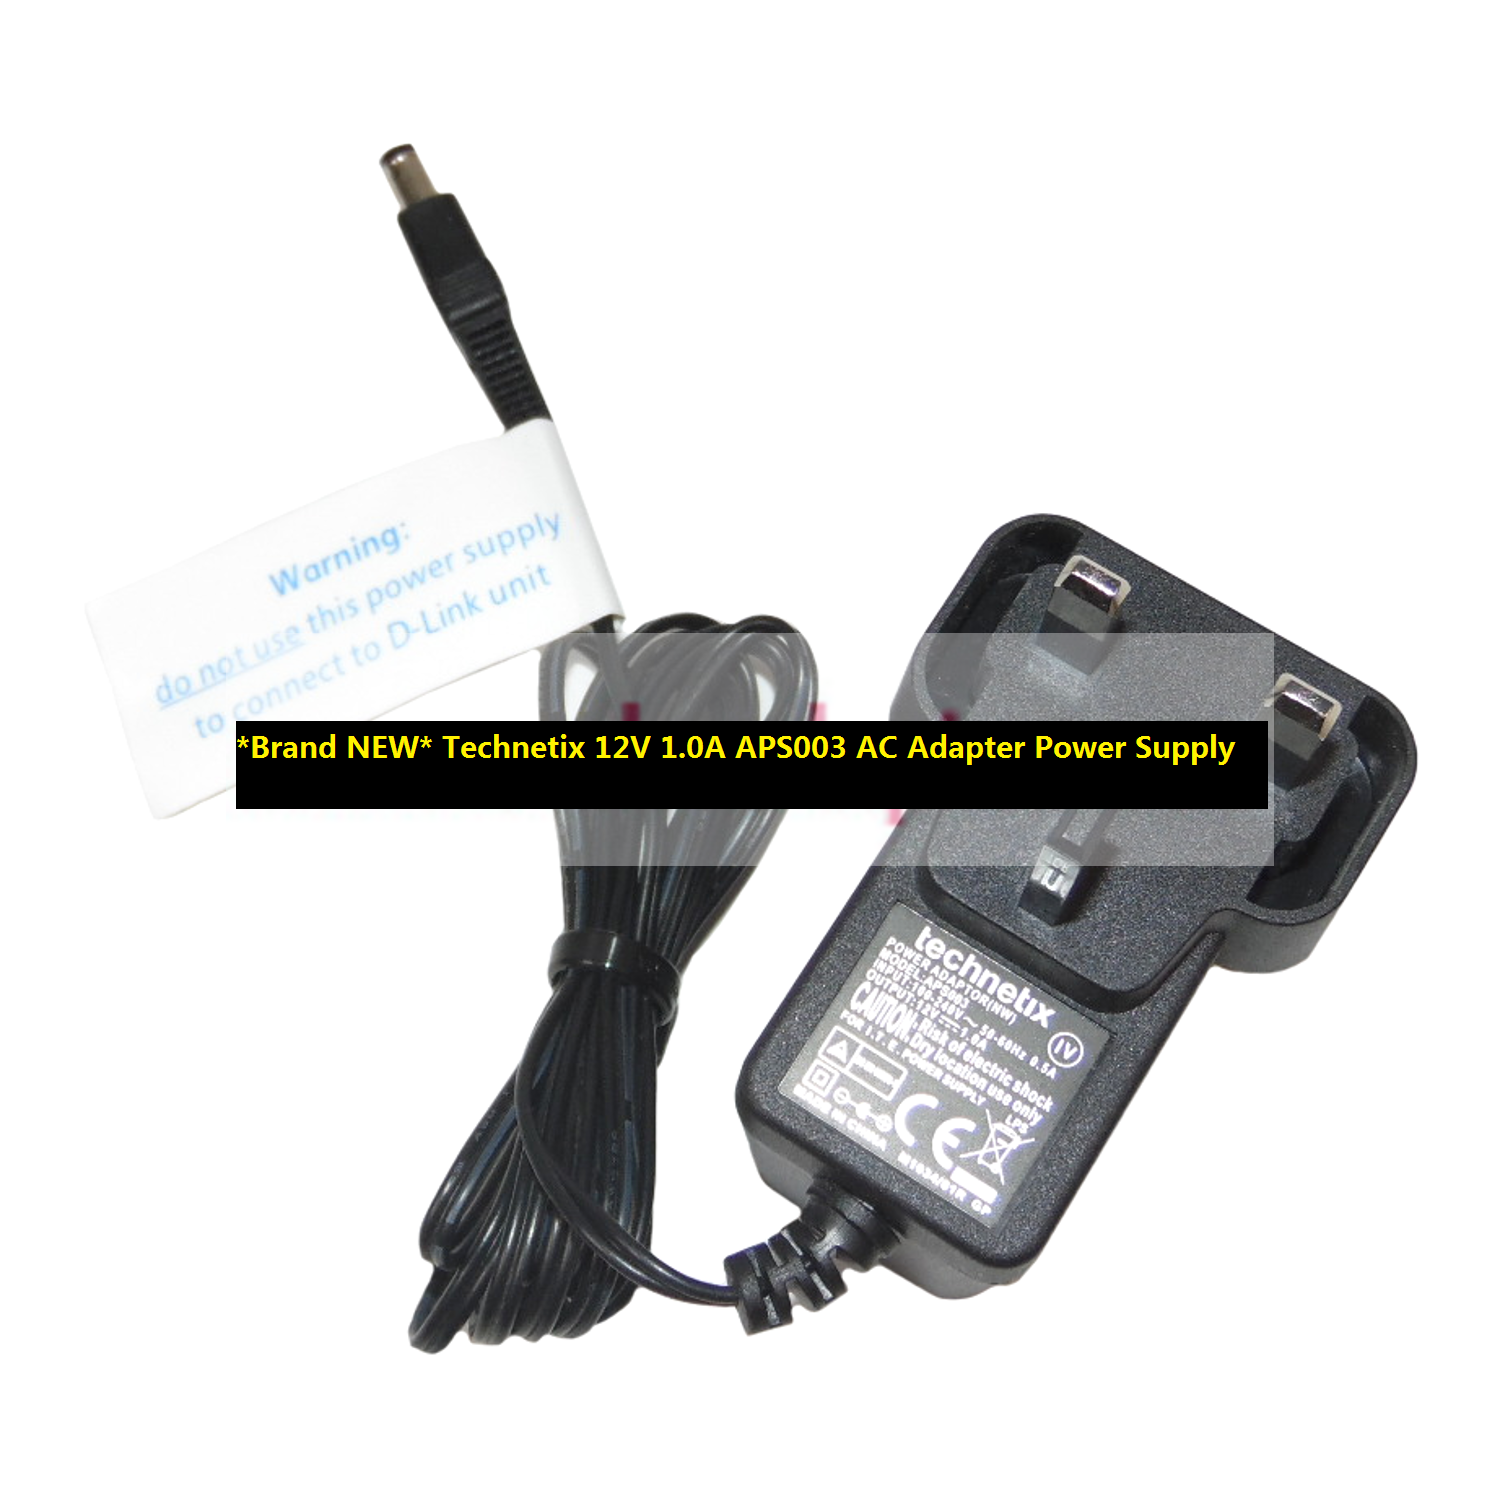 *Brand NEW* Technetix 12V 1.0A APS003 AC Adapter Power Supply